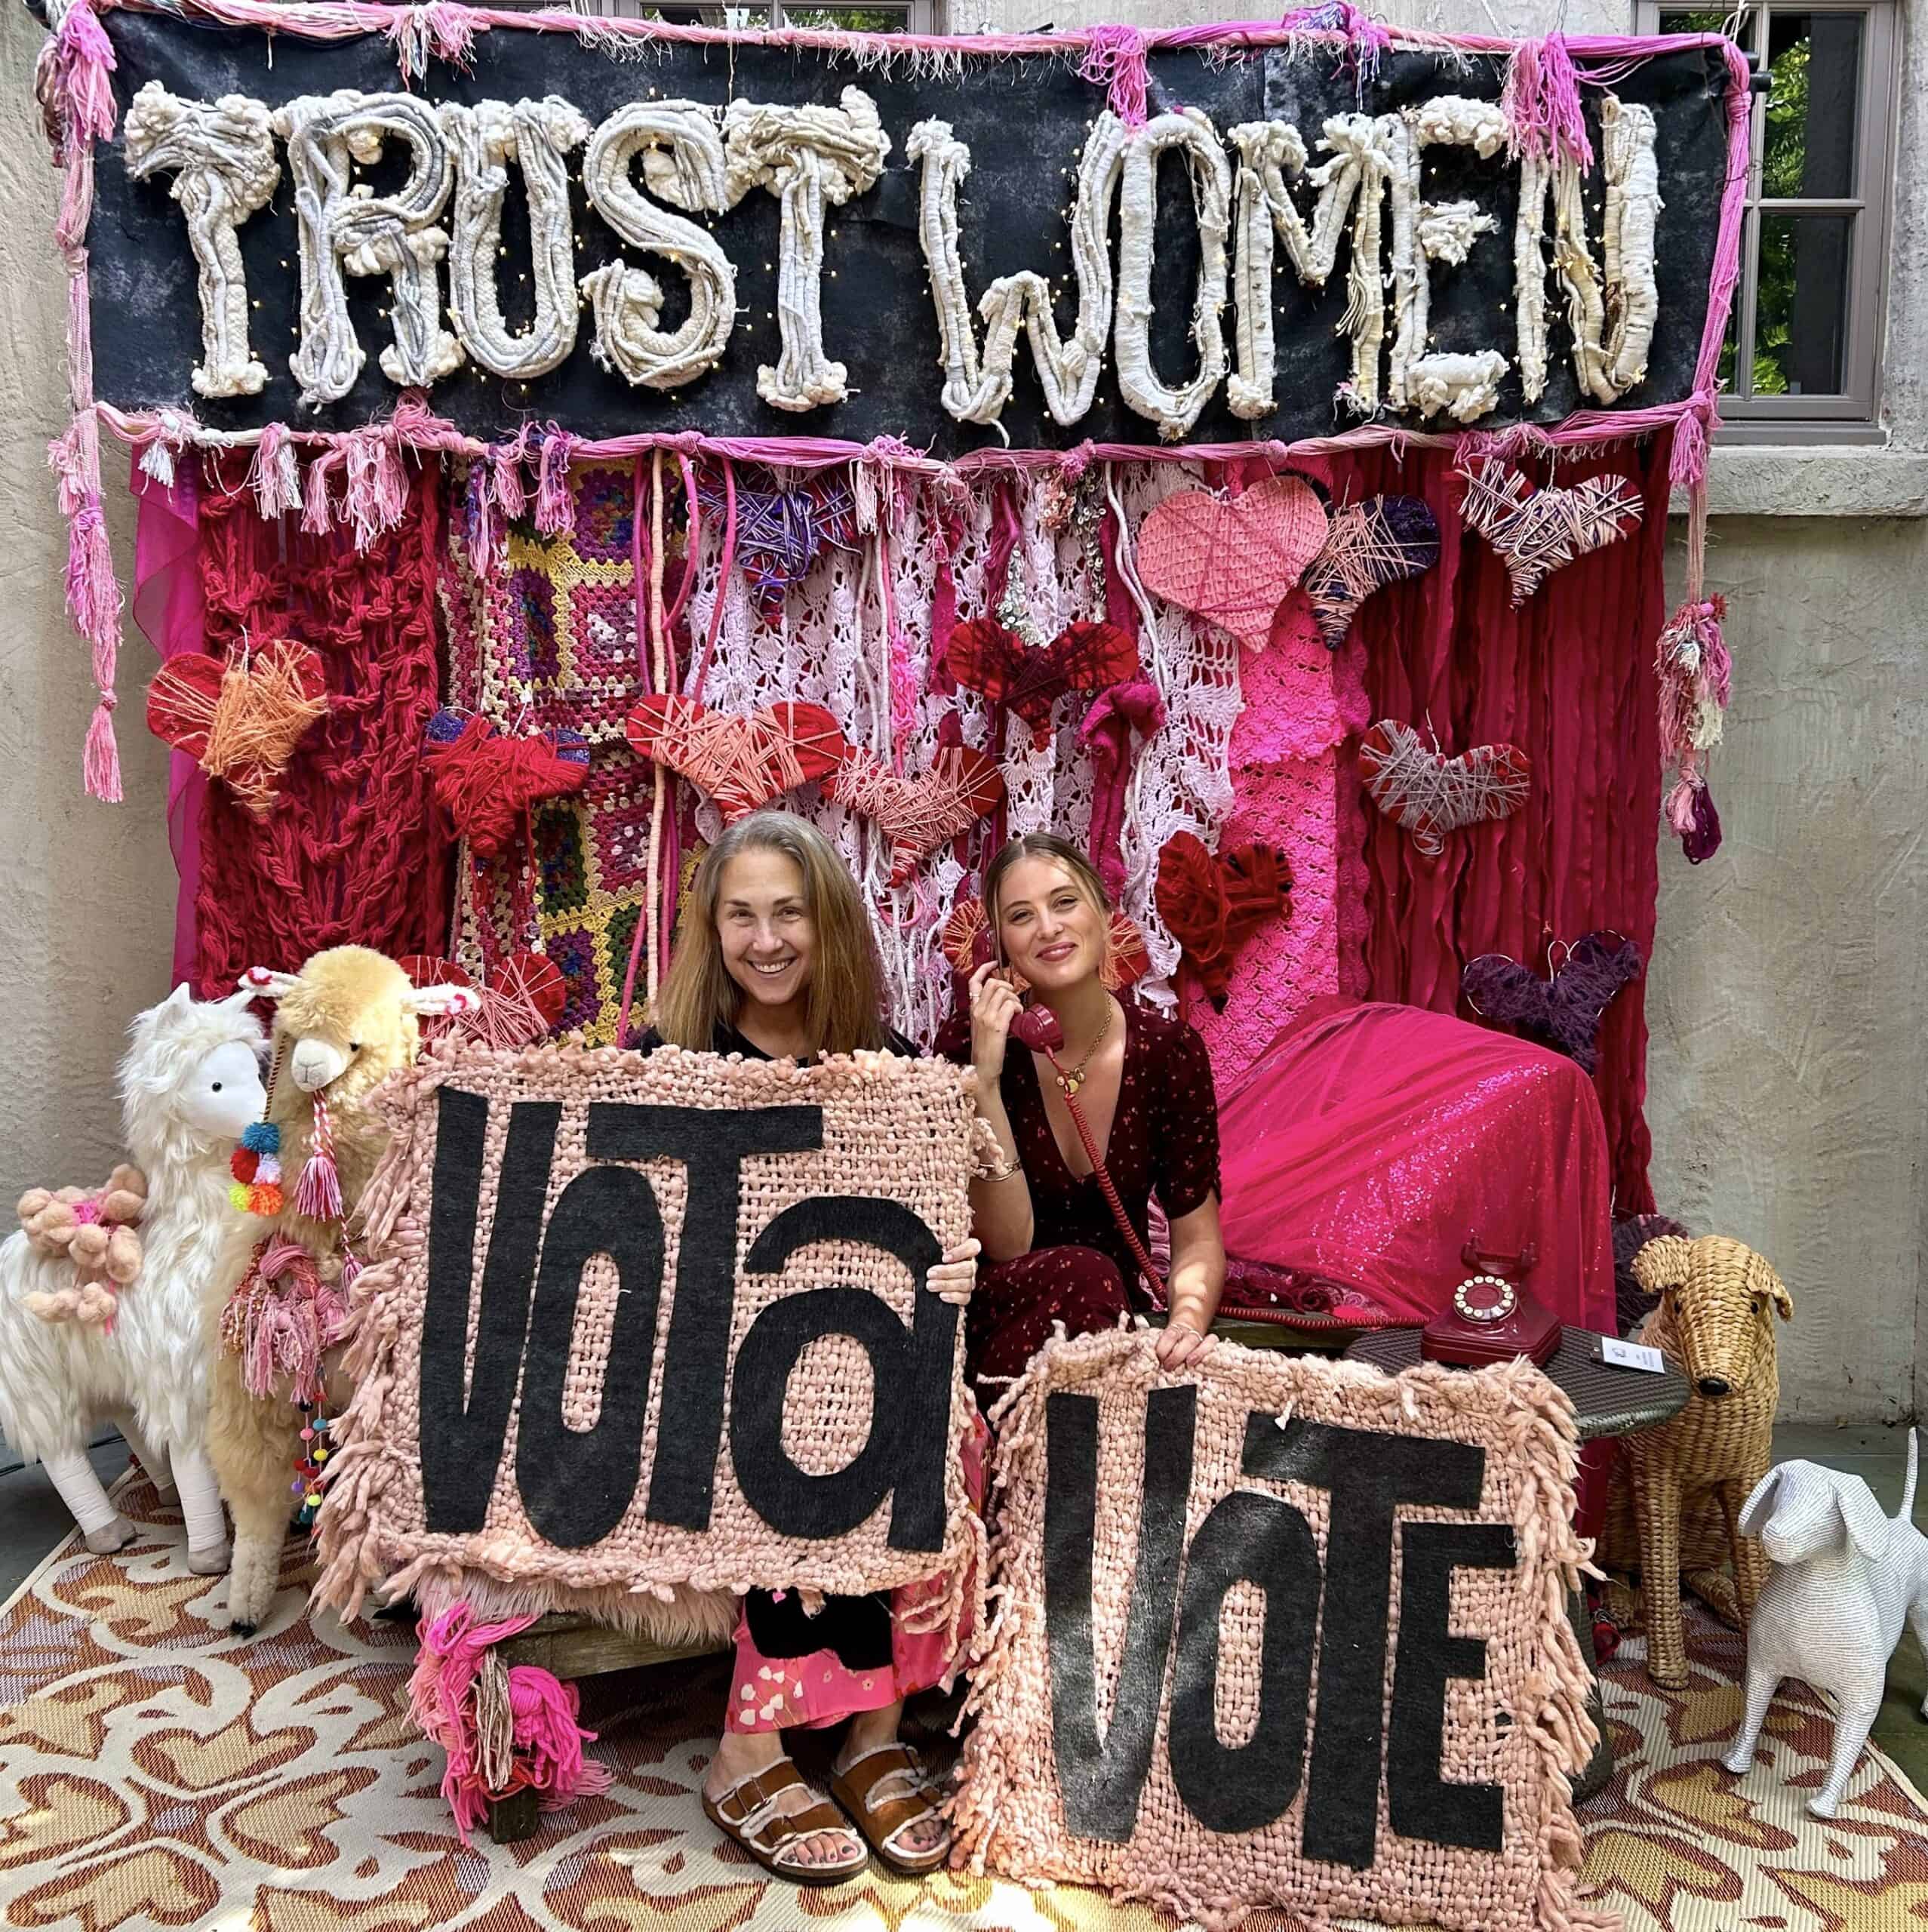 Pink yarn selfie station at Mi Vecino!